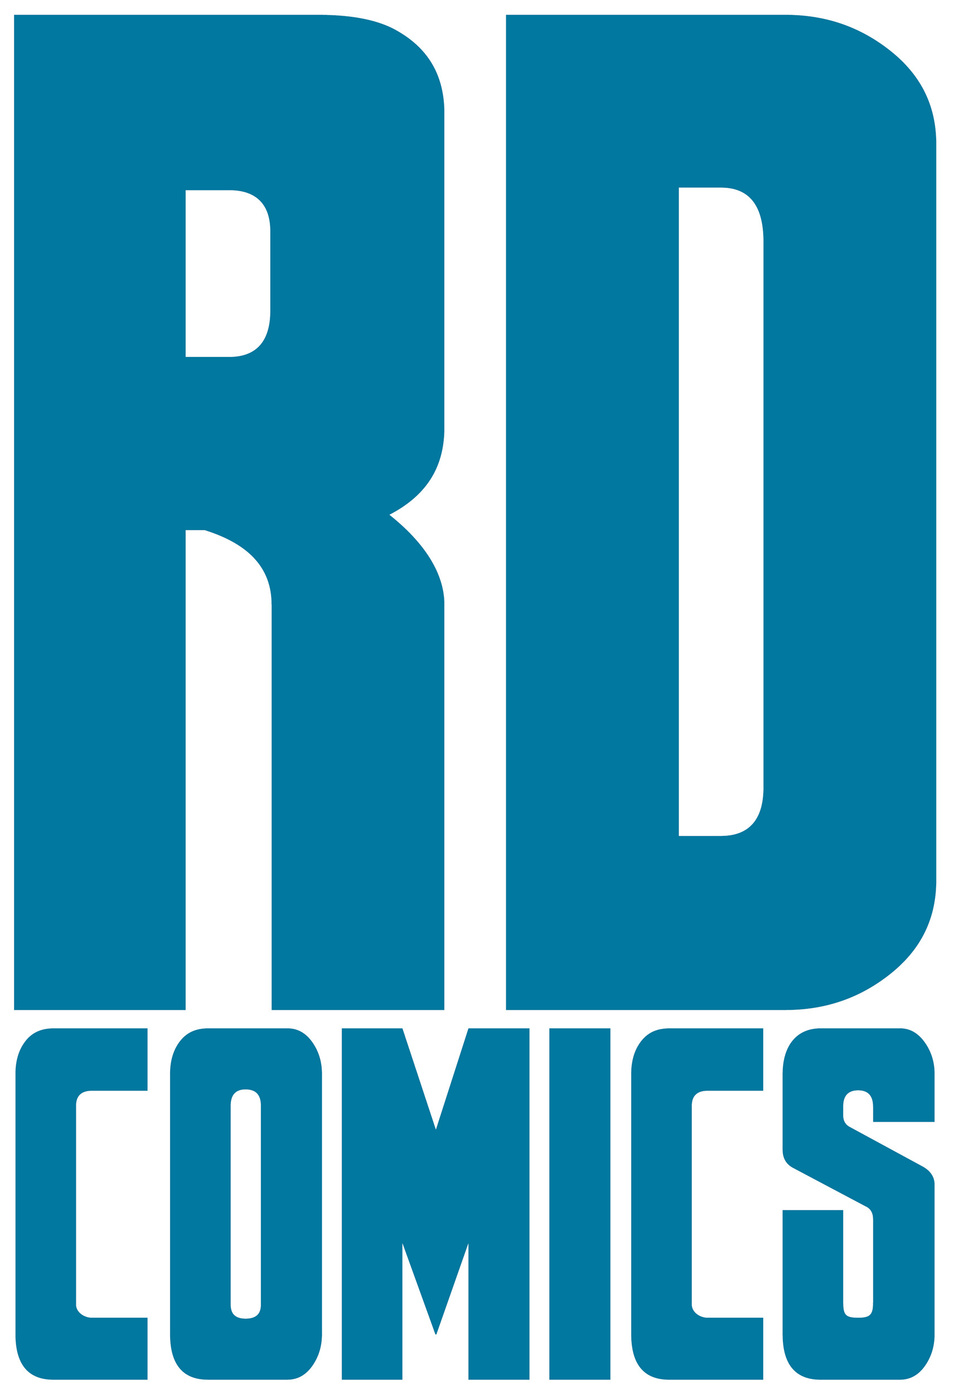 Robert Deas Comics